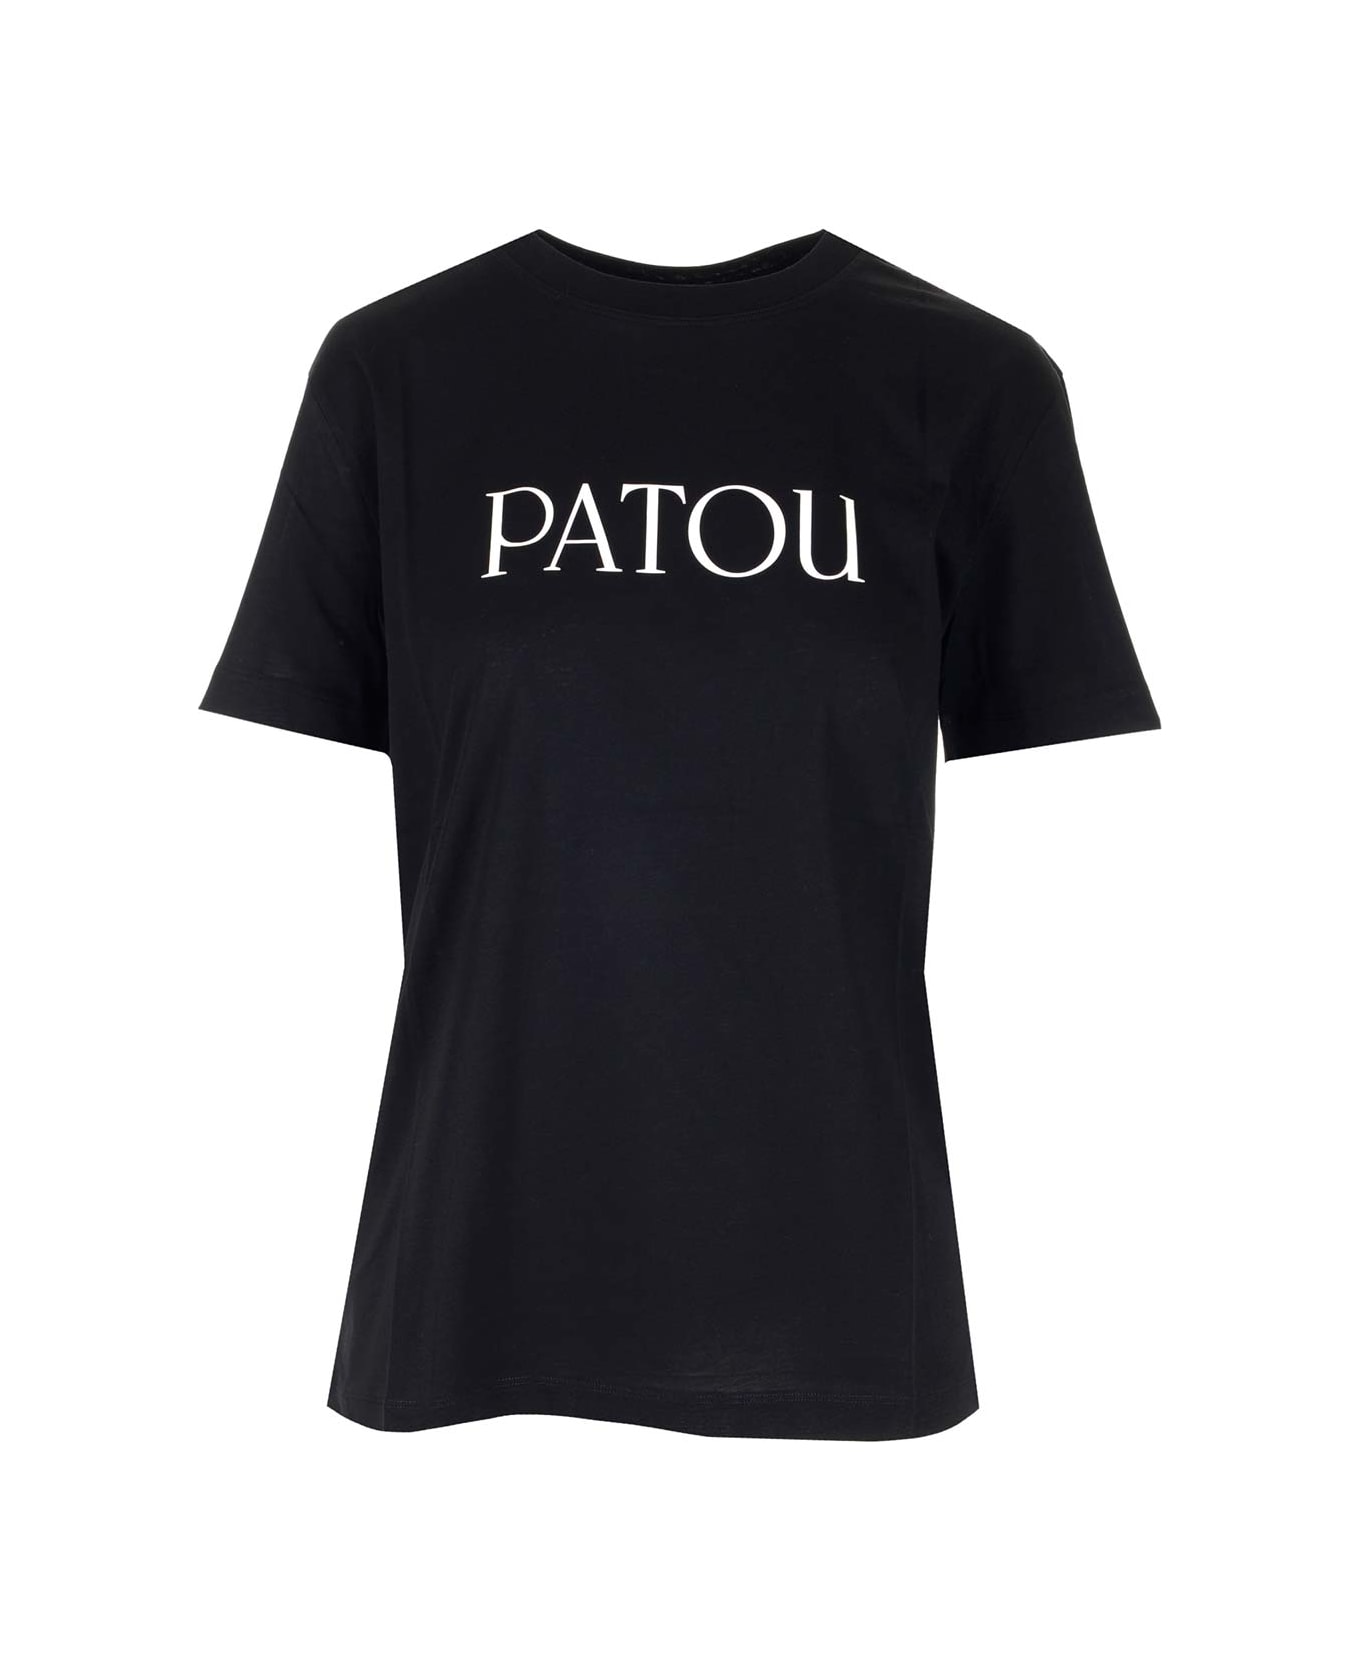 Patou Black T-shirt With White Logo - Nero Tシャツ